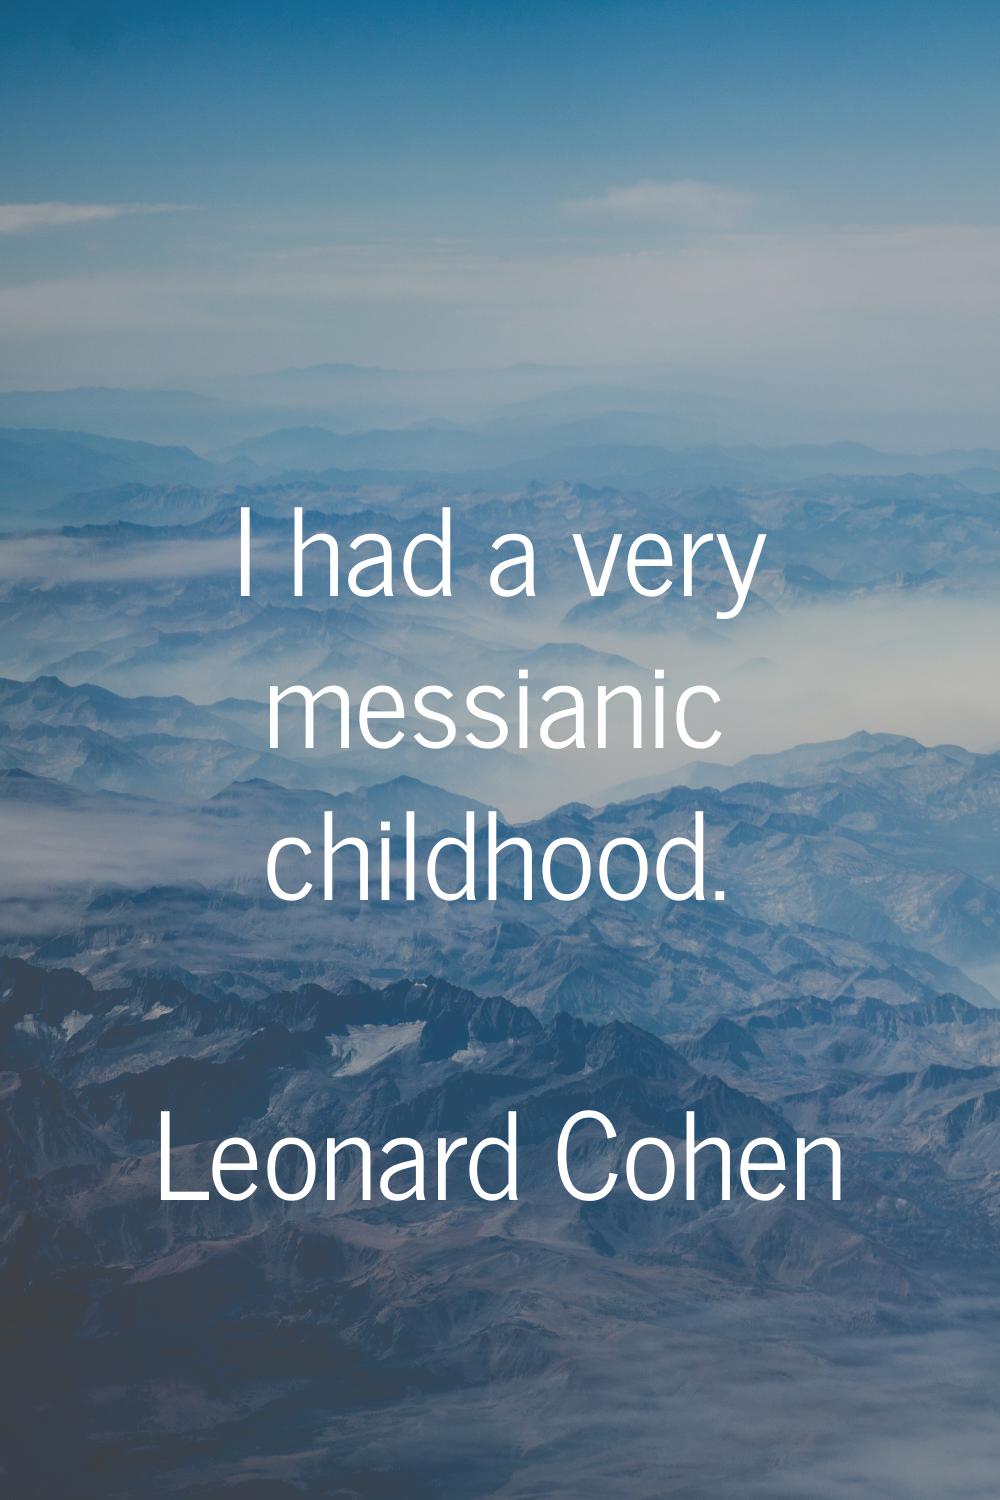 I had a very messianic childhood.